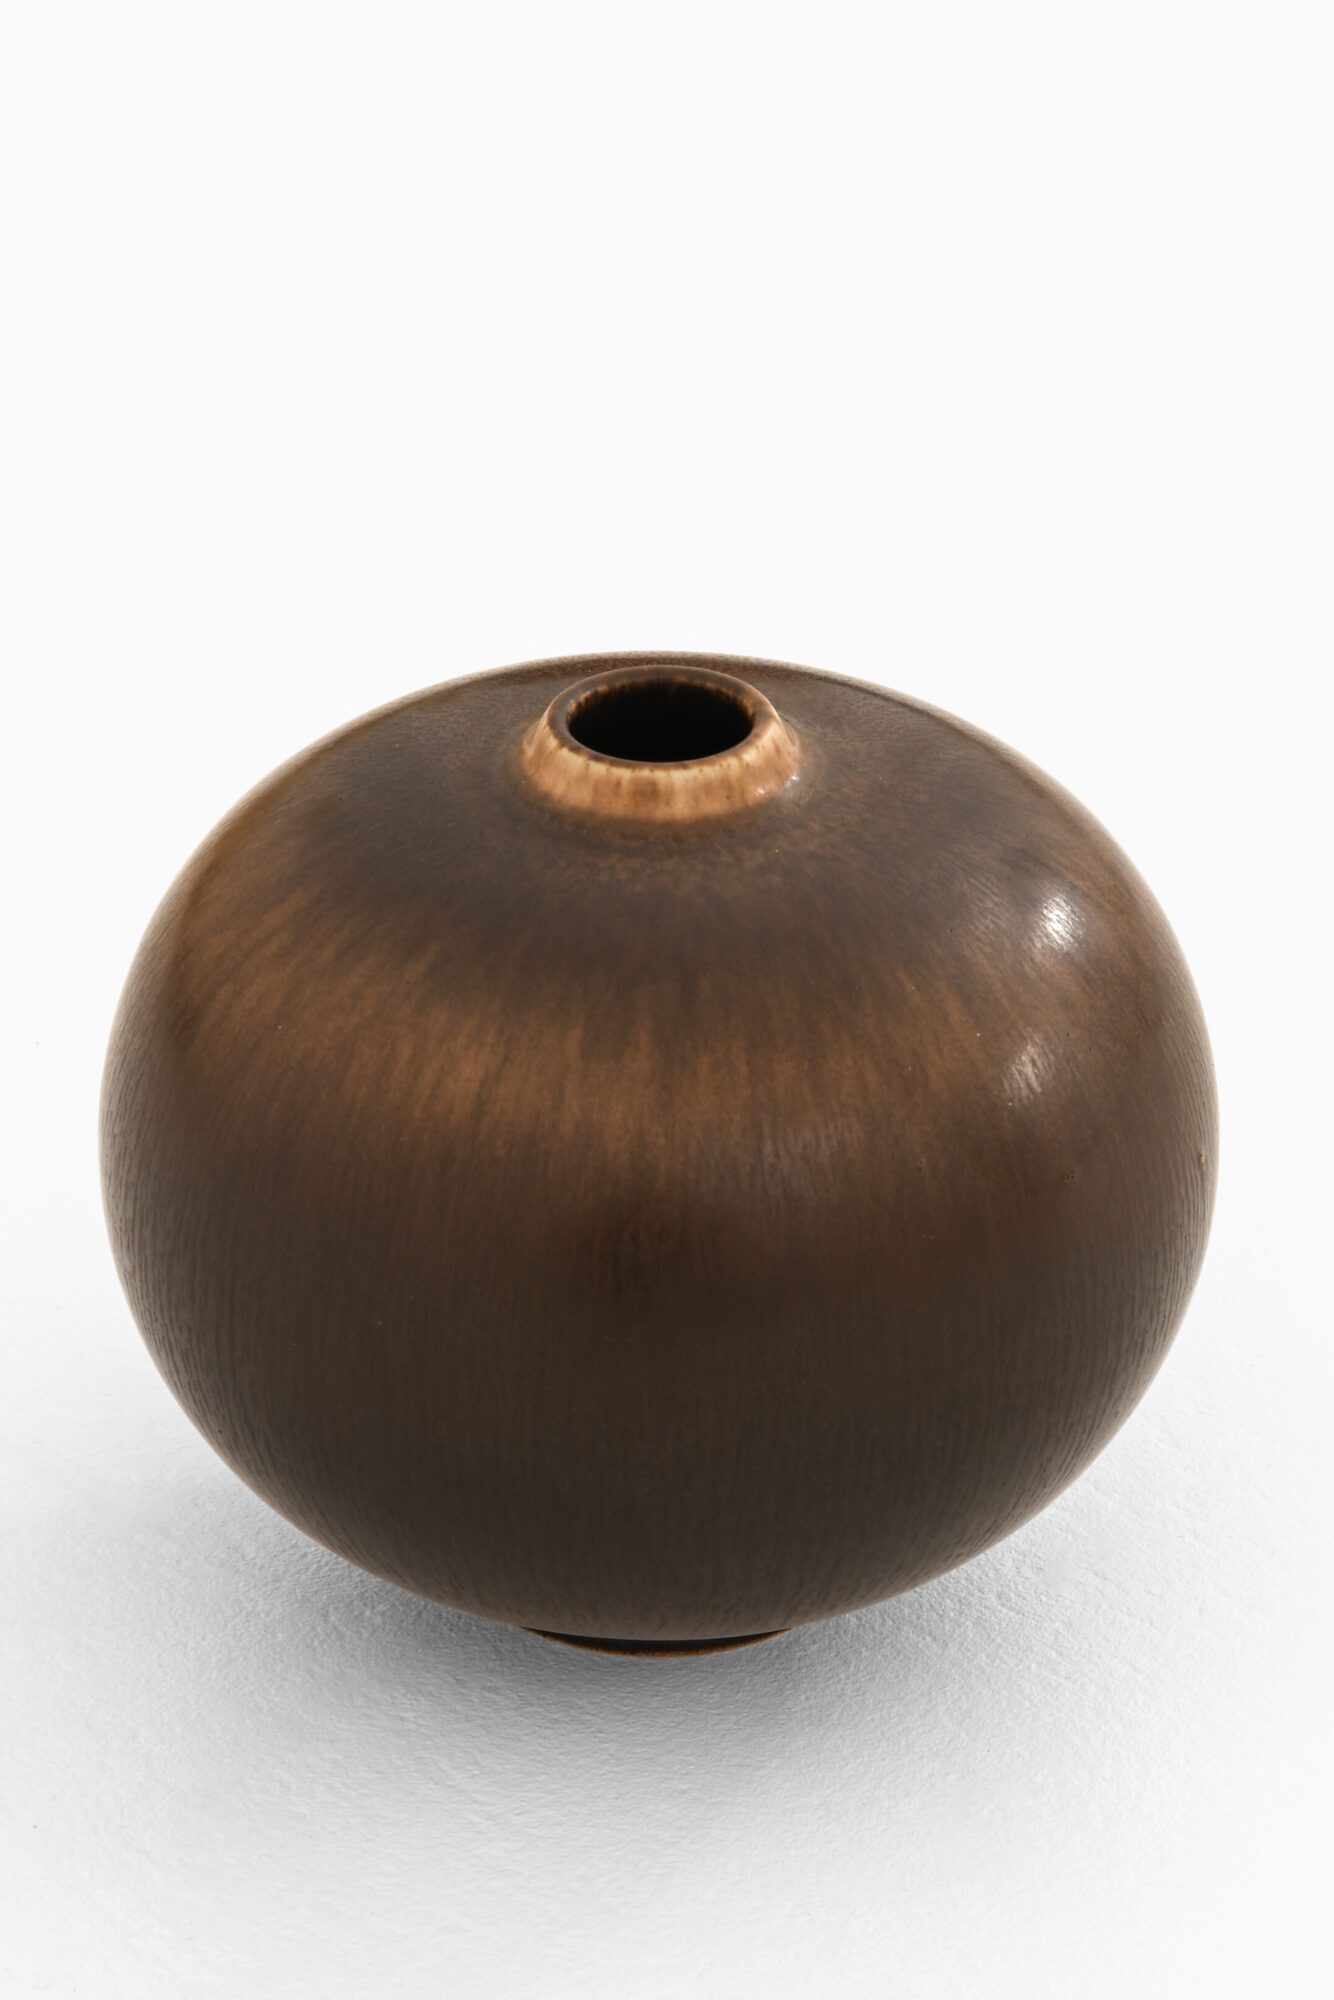 Berndt Friberg ceramic vase at Studio Schalling